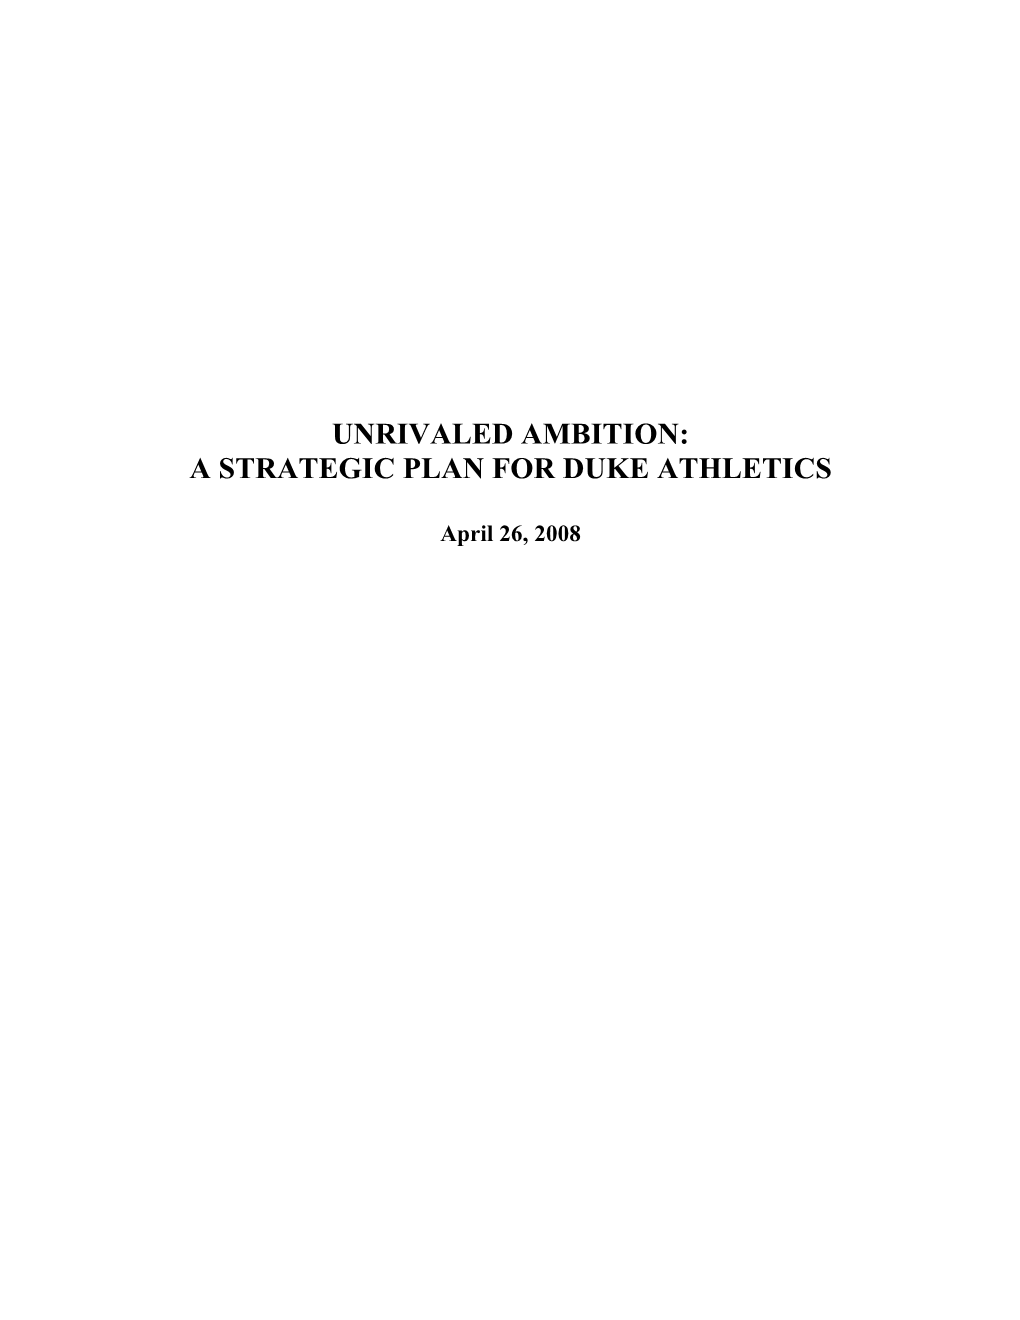 A Strategic Plan for Duke Athletics